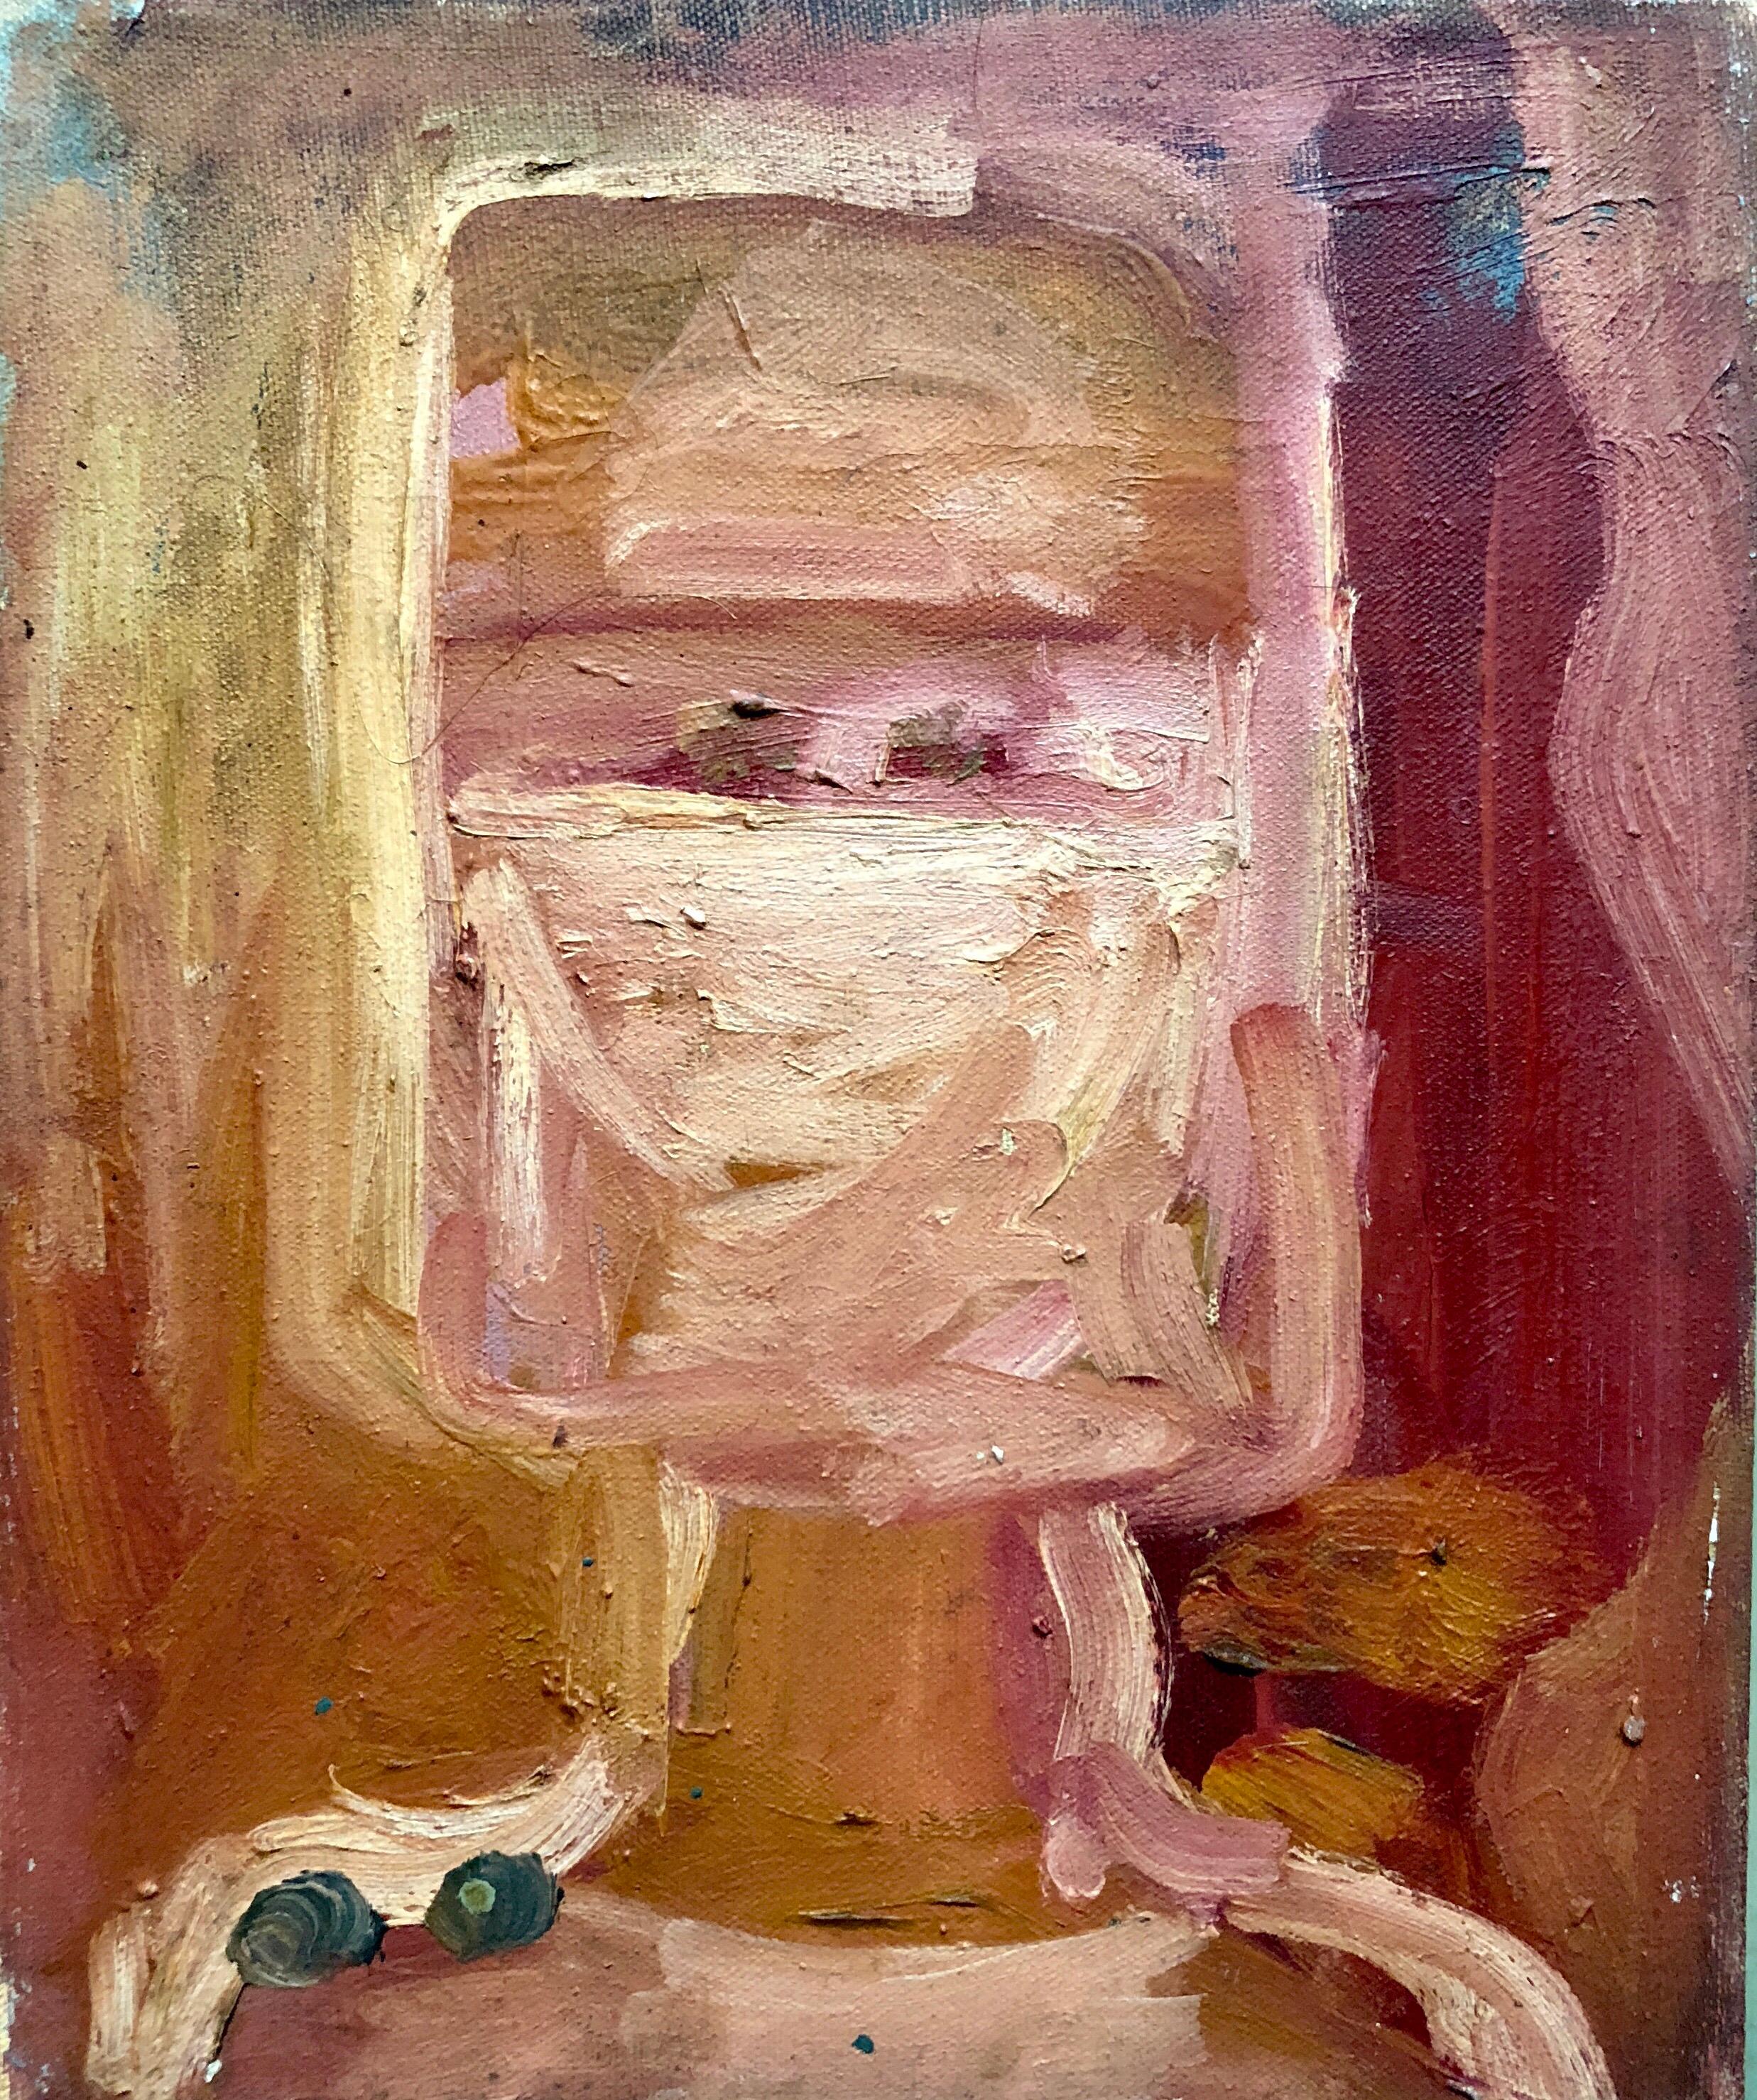 Patricia Sloane Portrait Painting - Abstract Expressionist Pop Art Oil Painting Woman Nurse Figure Portrait 2 of 2